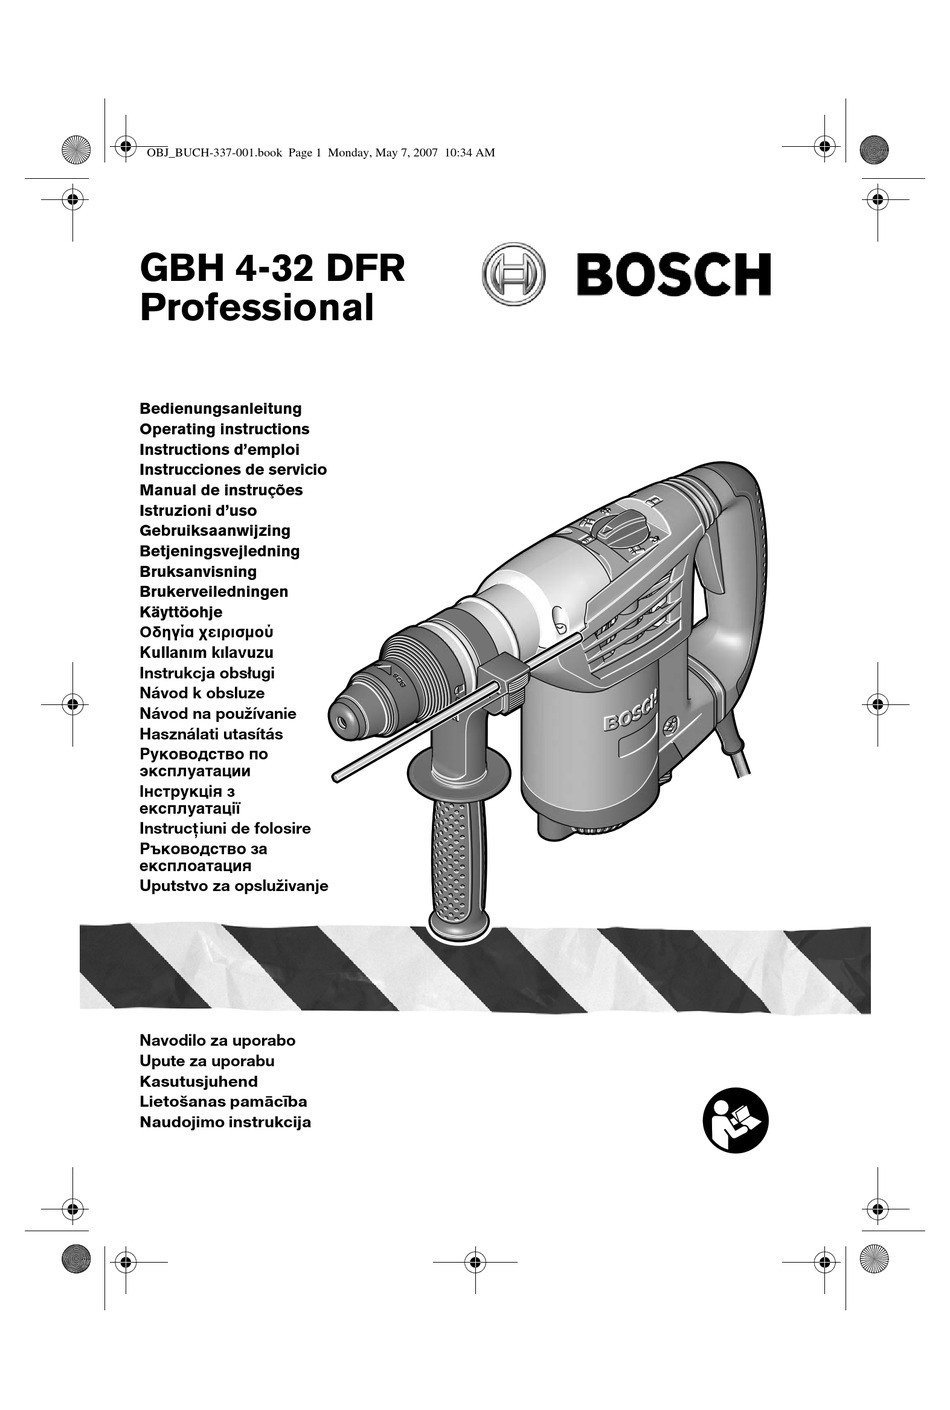 GBH 4-32 DFR